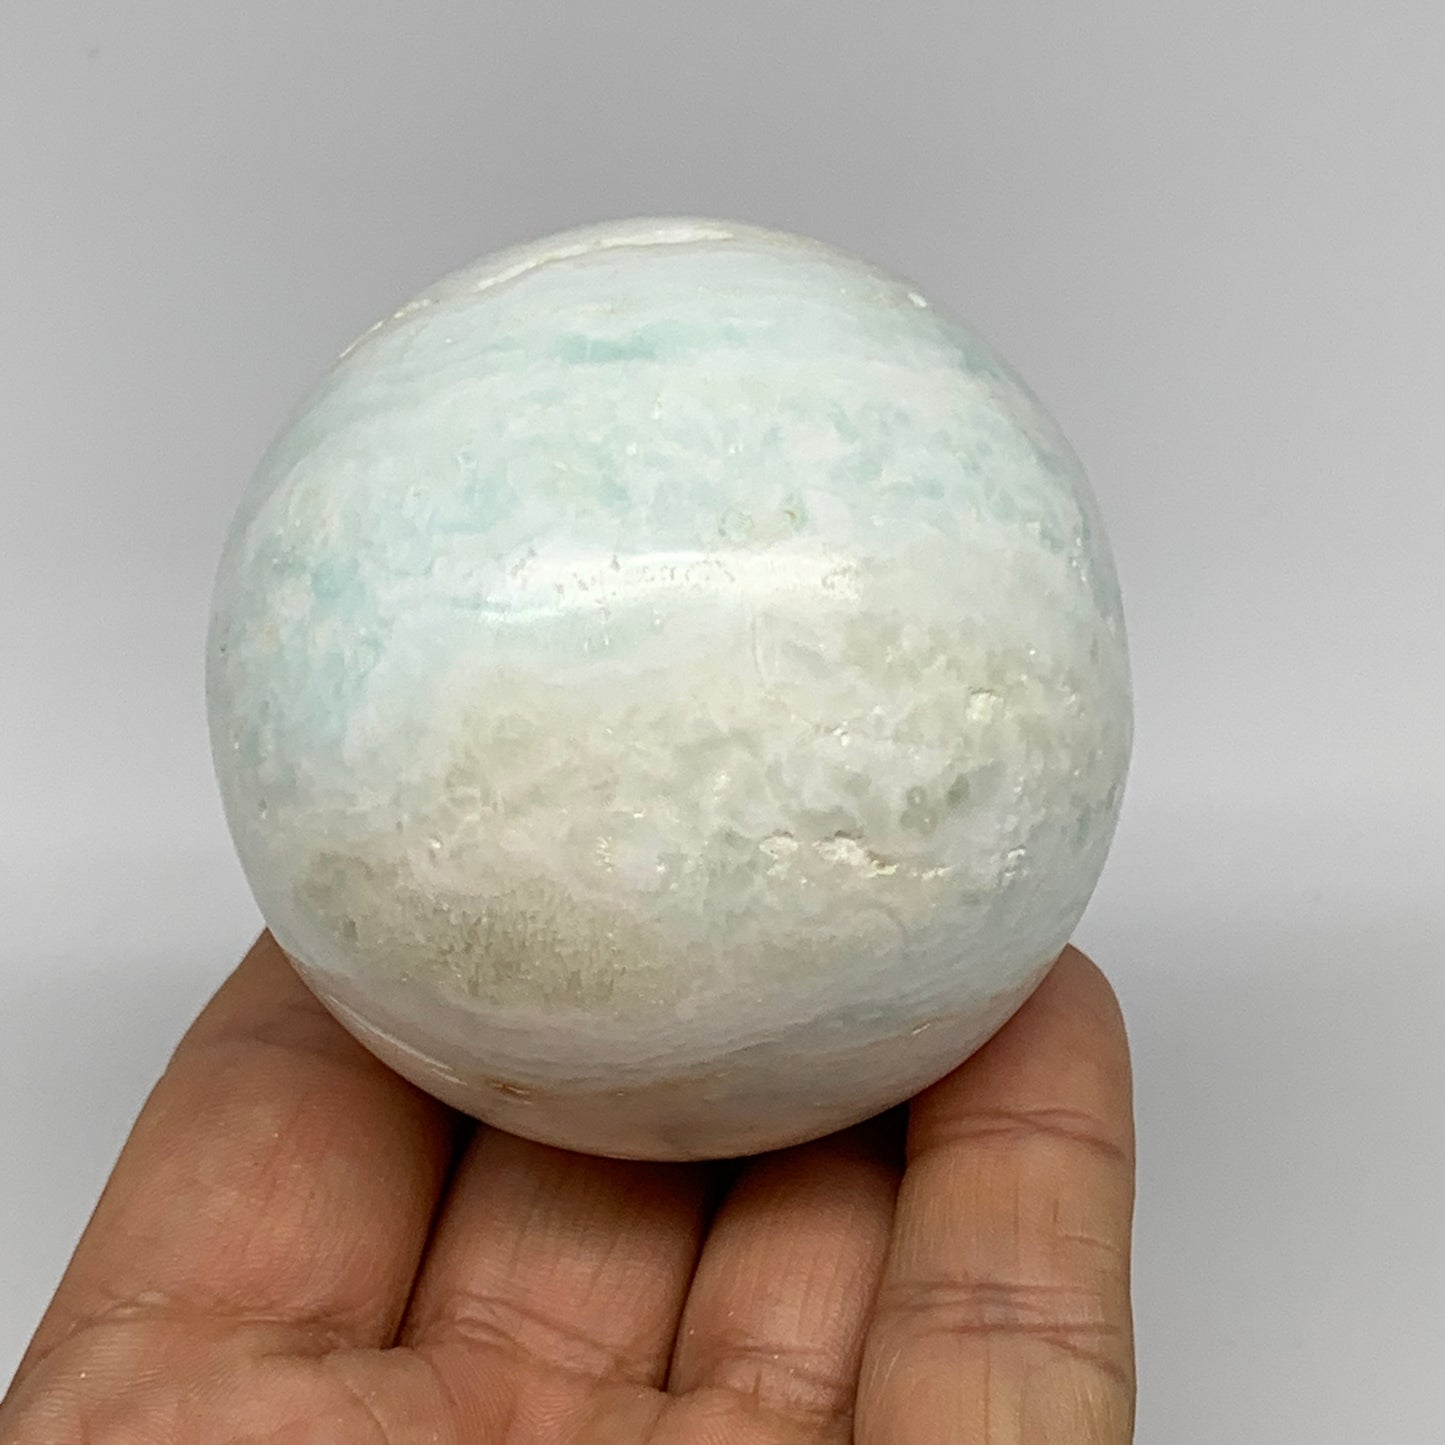 299.7g,2.3"(59mm) Caribbean Calcite Sphere Gemstone,Healing Crystal,B25147